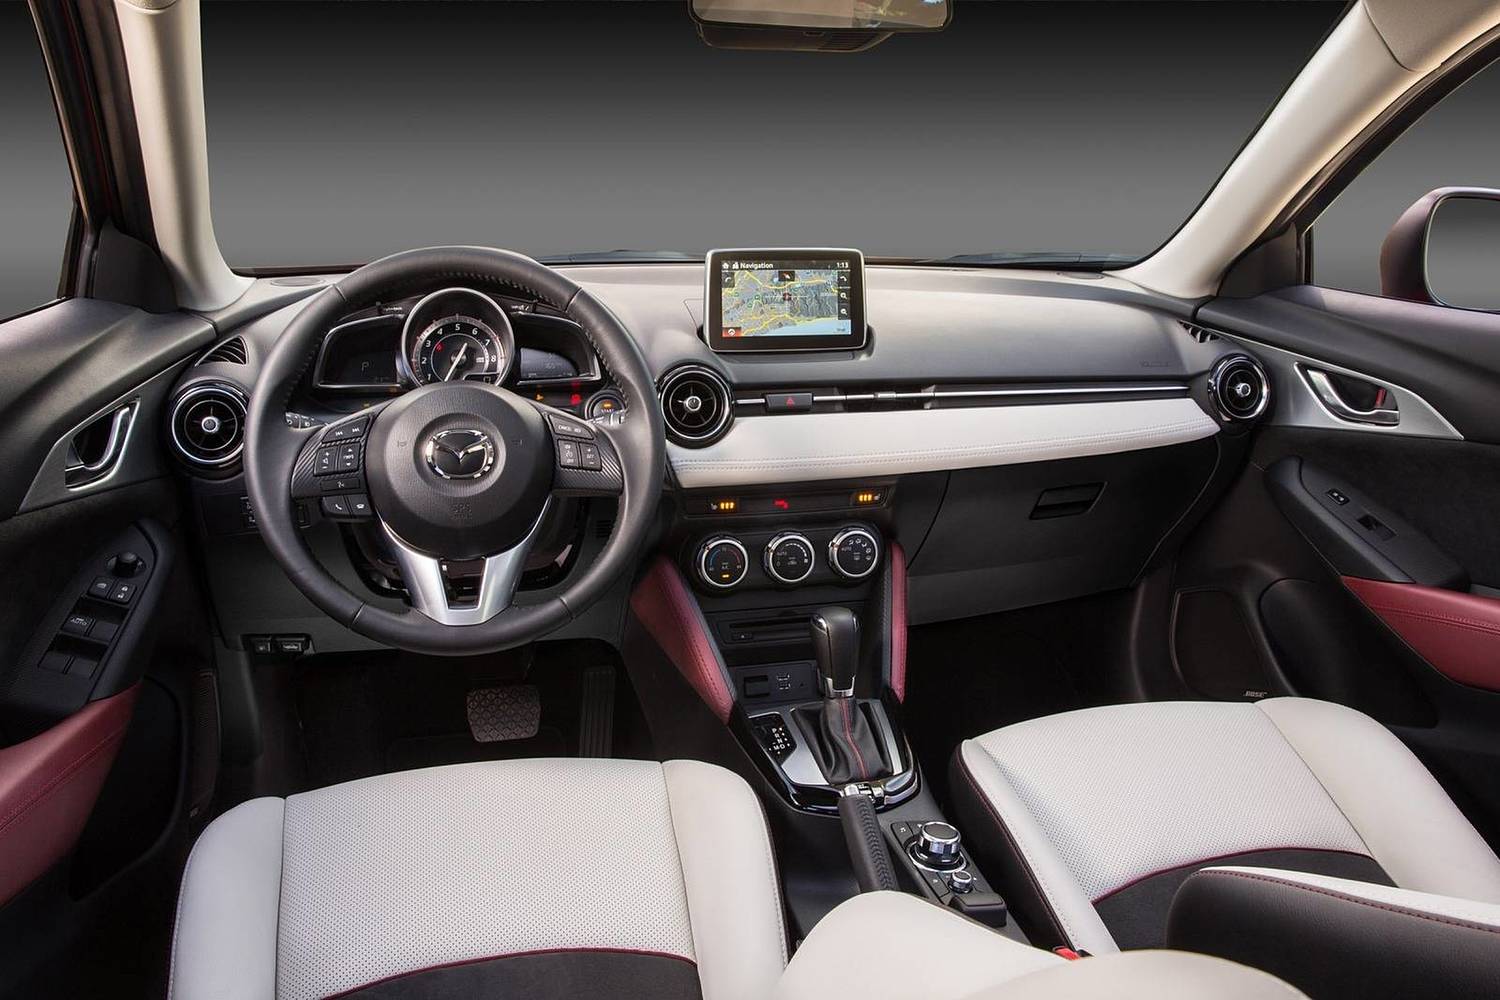 Mazda CX-3 Grand Touring 4dr SUV Dashboard Shown (2017 model year shown)